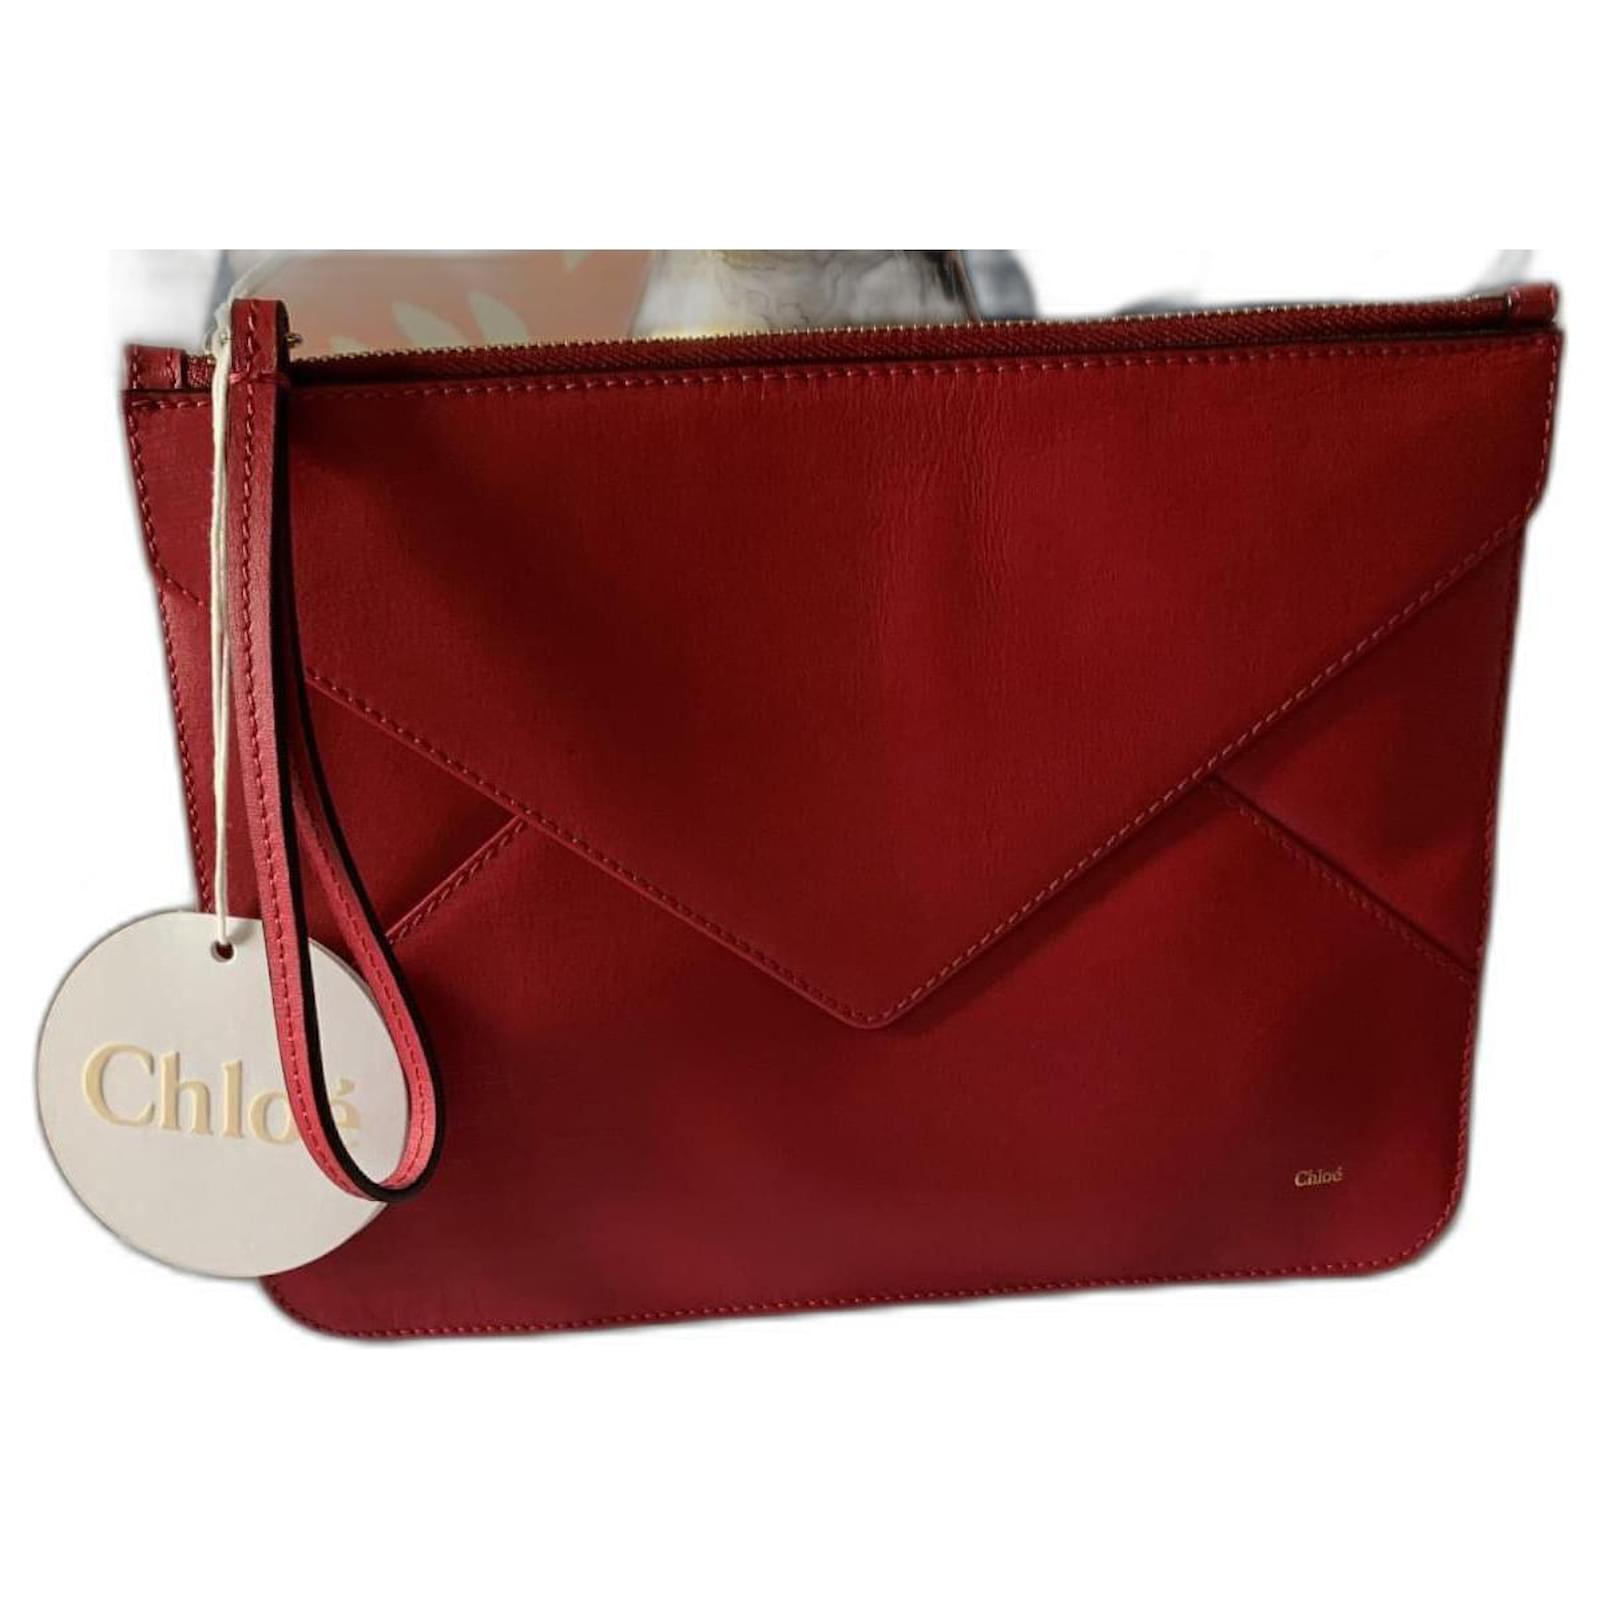 Chloé Nile minaudiere clutch bag - bright pink Chloe purse with ring handle  | Chloe purses, Black leather handbags, Bags